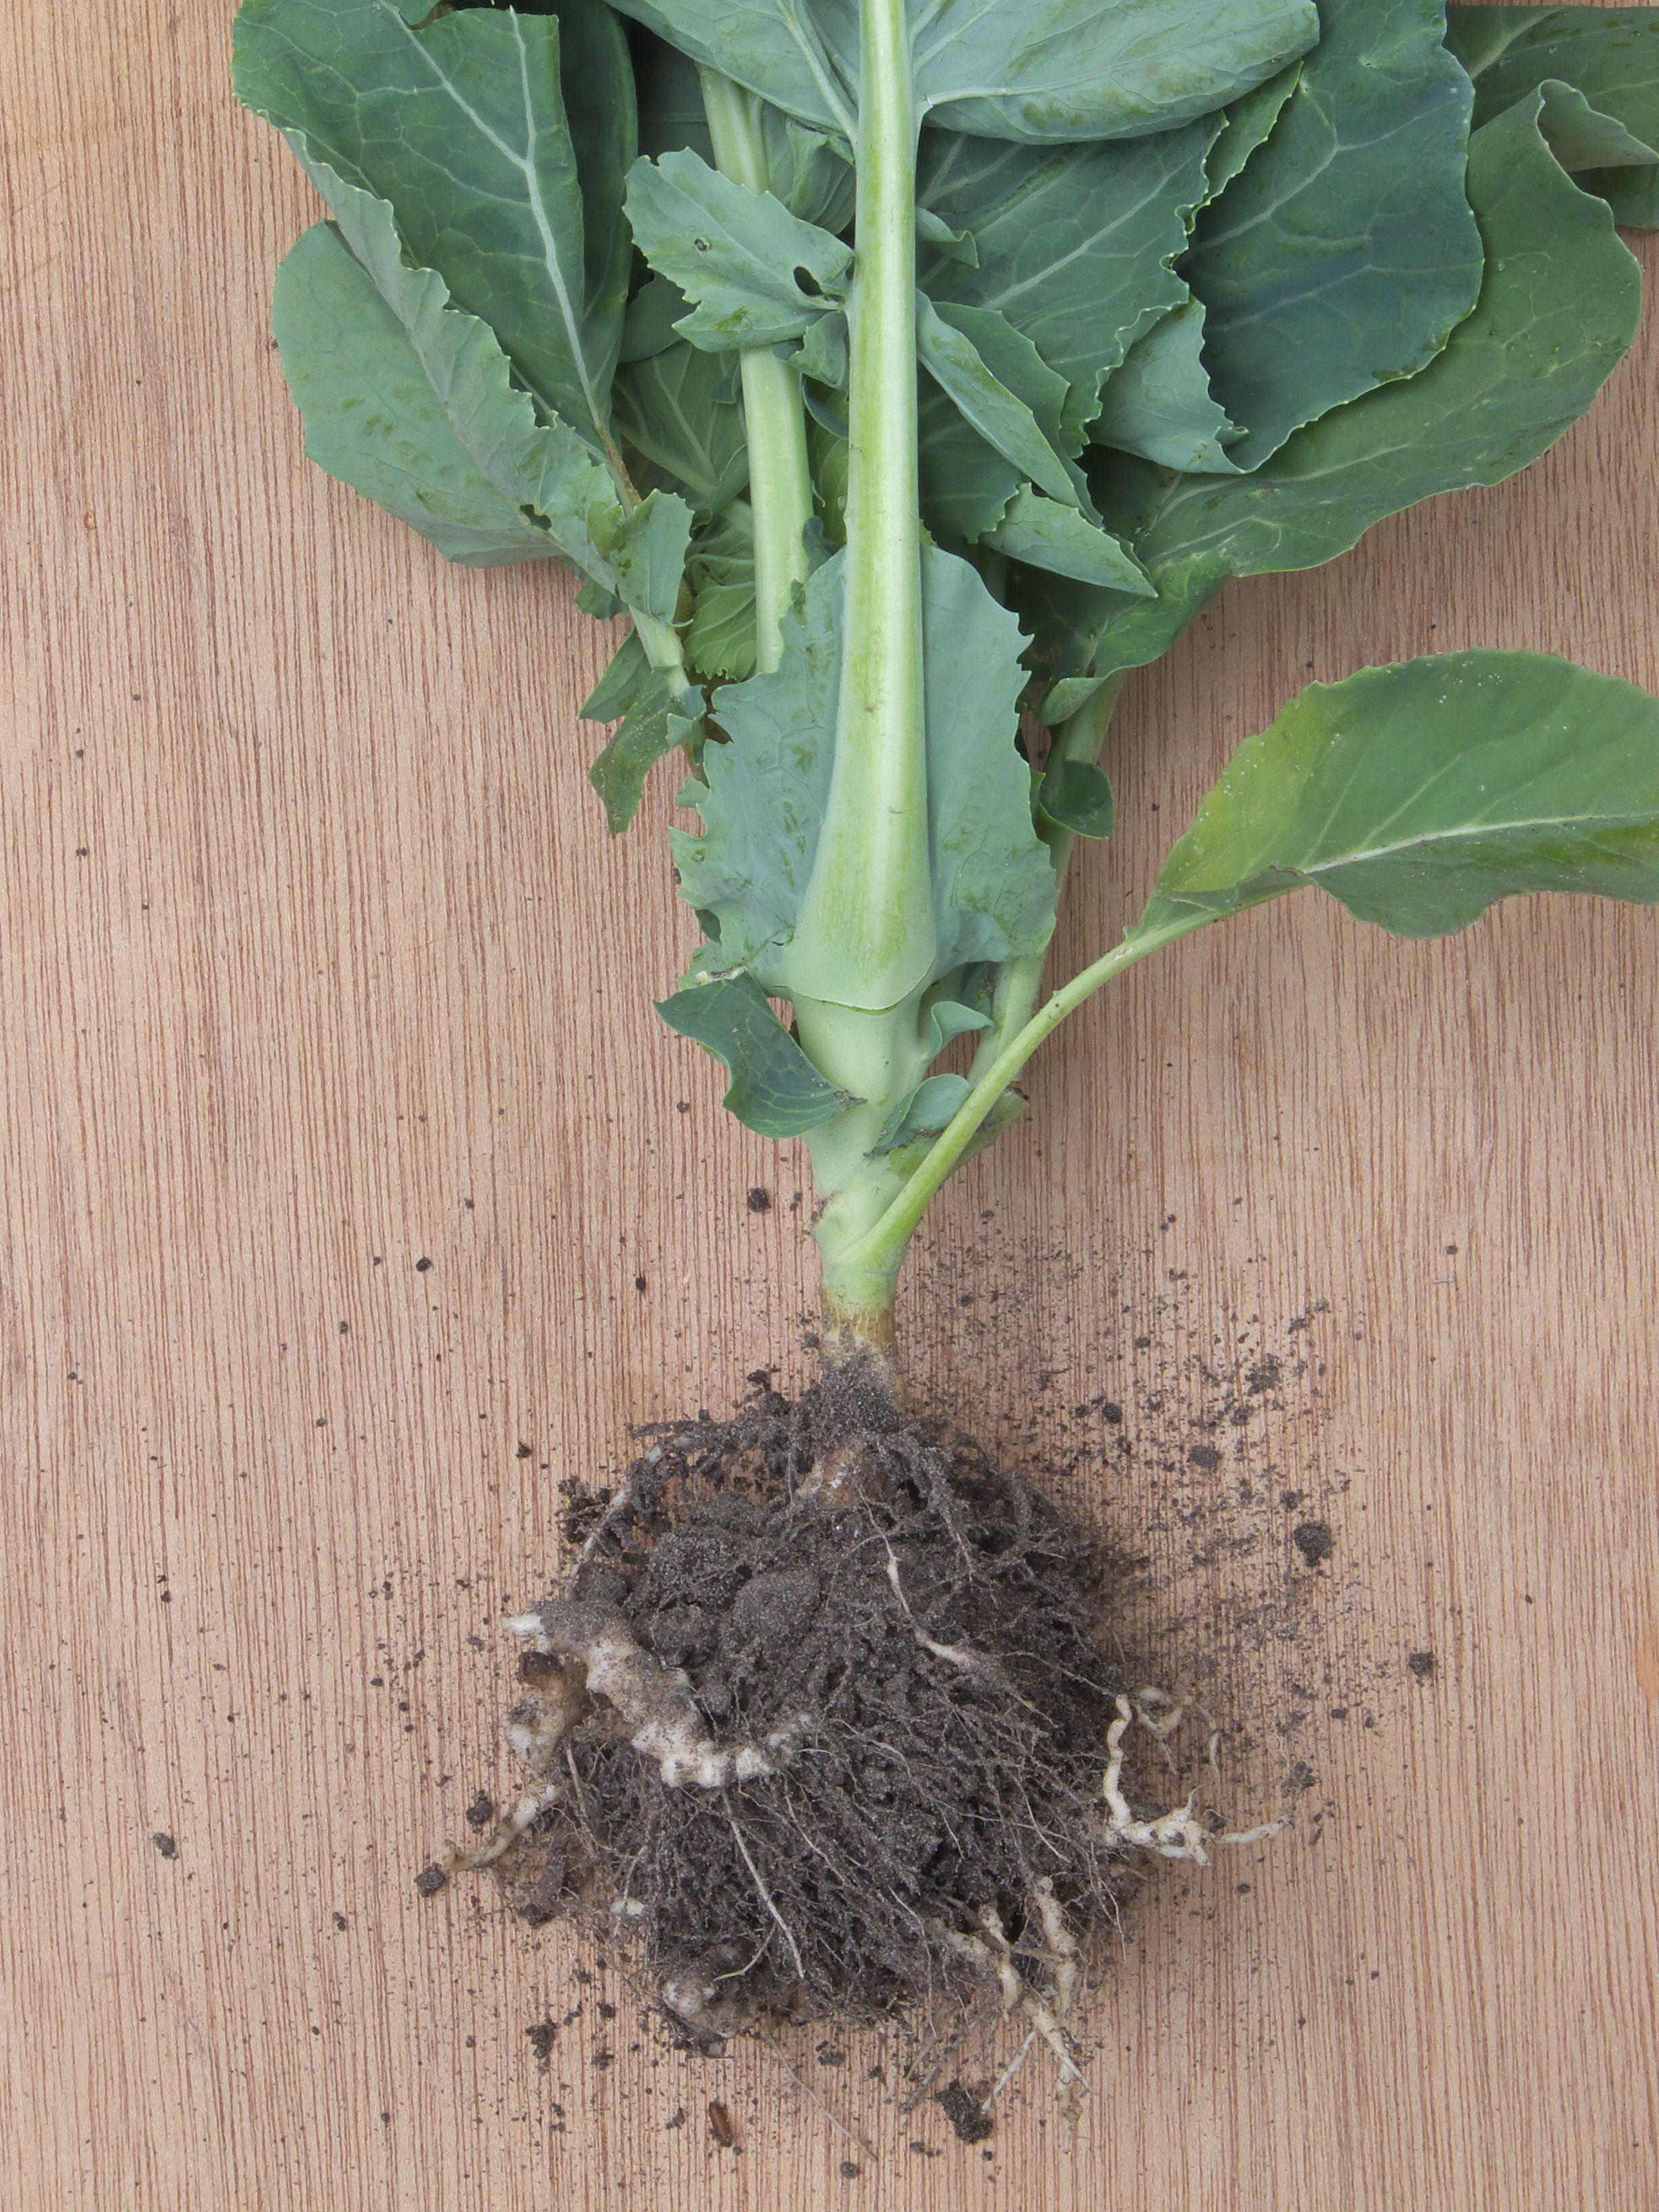 Plasmodiophora brassicae on cauliflower, Knolvoet bij bloemkool